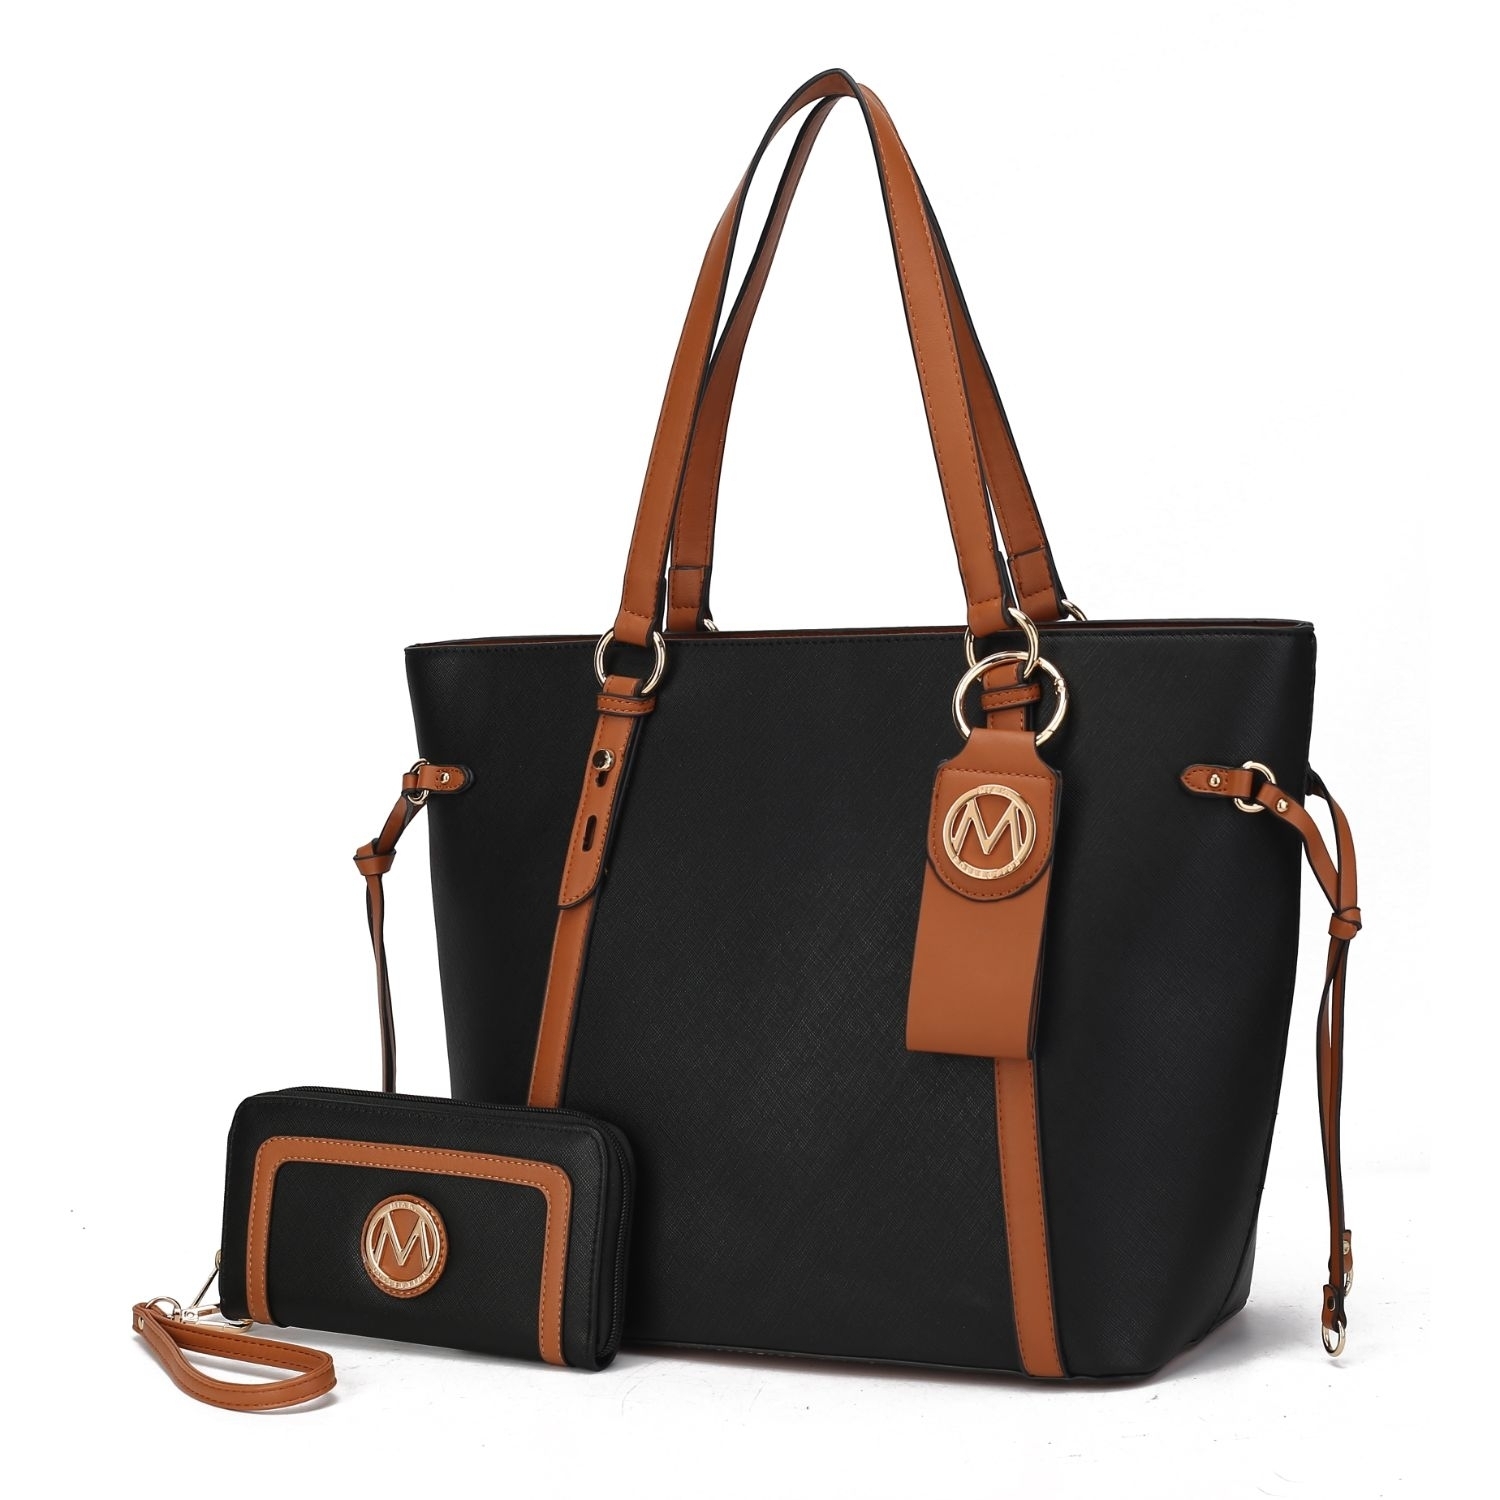 MKF Collection Koeia 3 Pcs Set Tote Handbag, Wallet And Keyring By Mia K. - Black Cognac